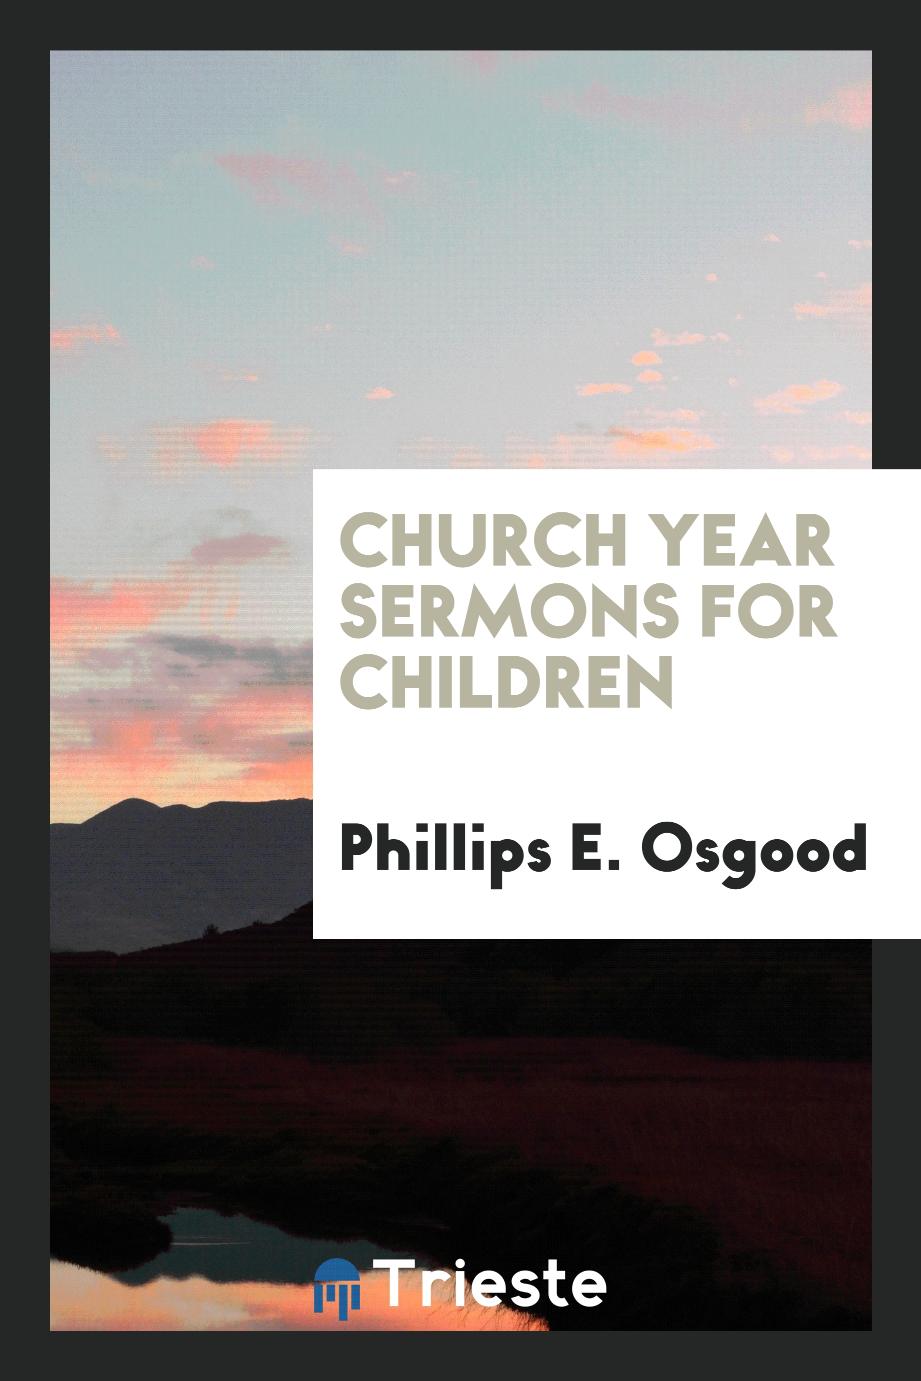 Church year sermons for children